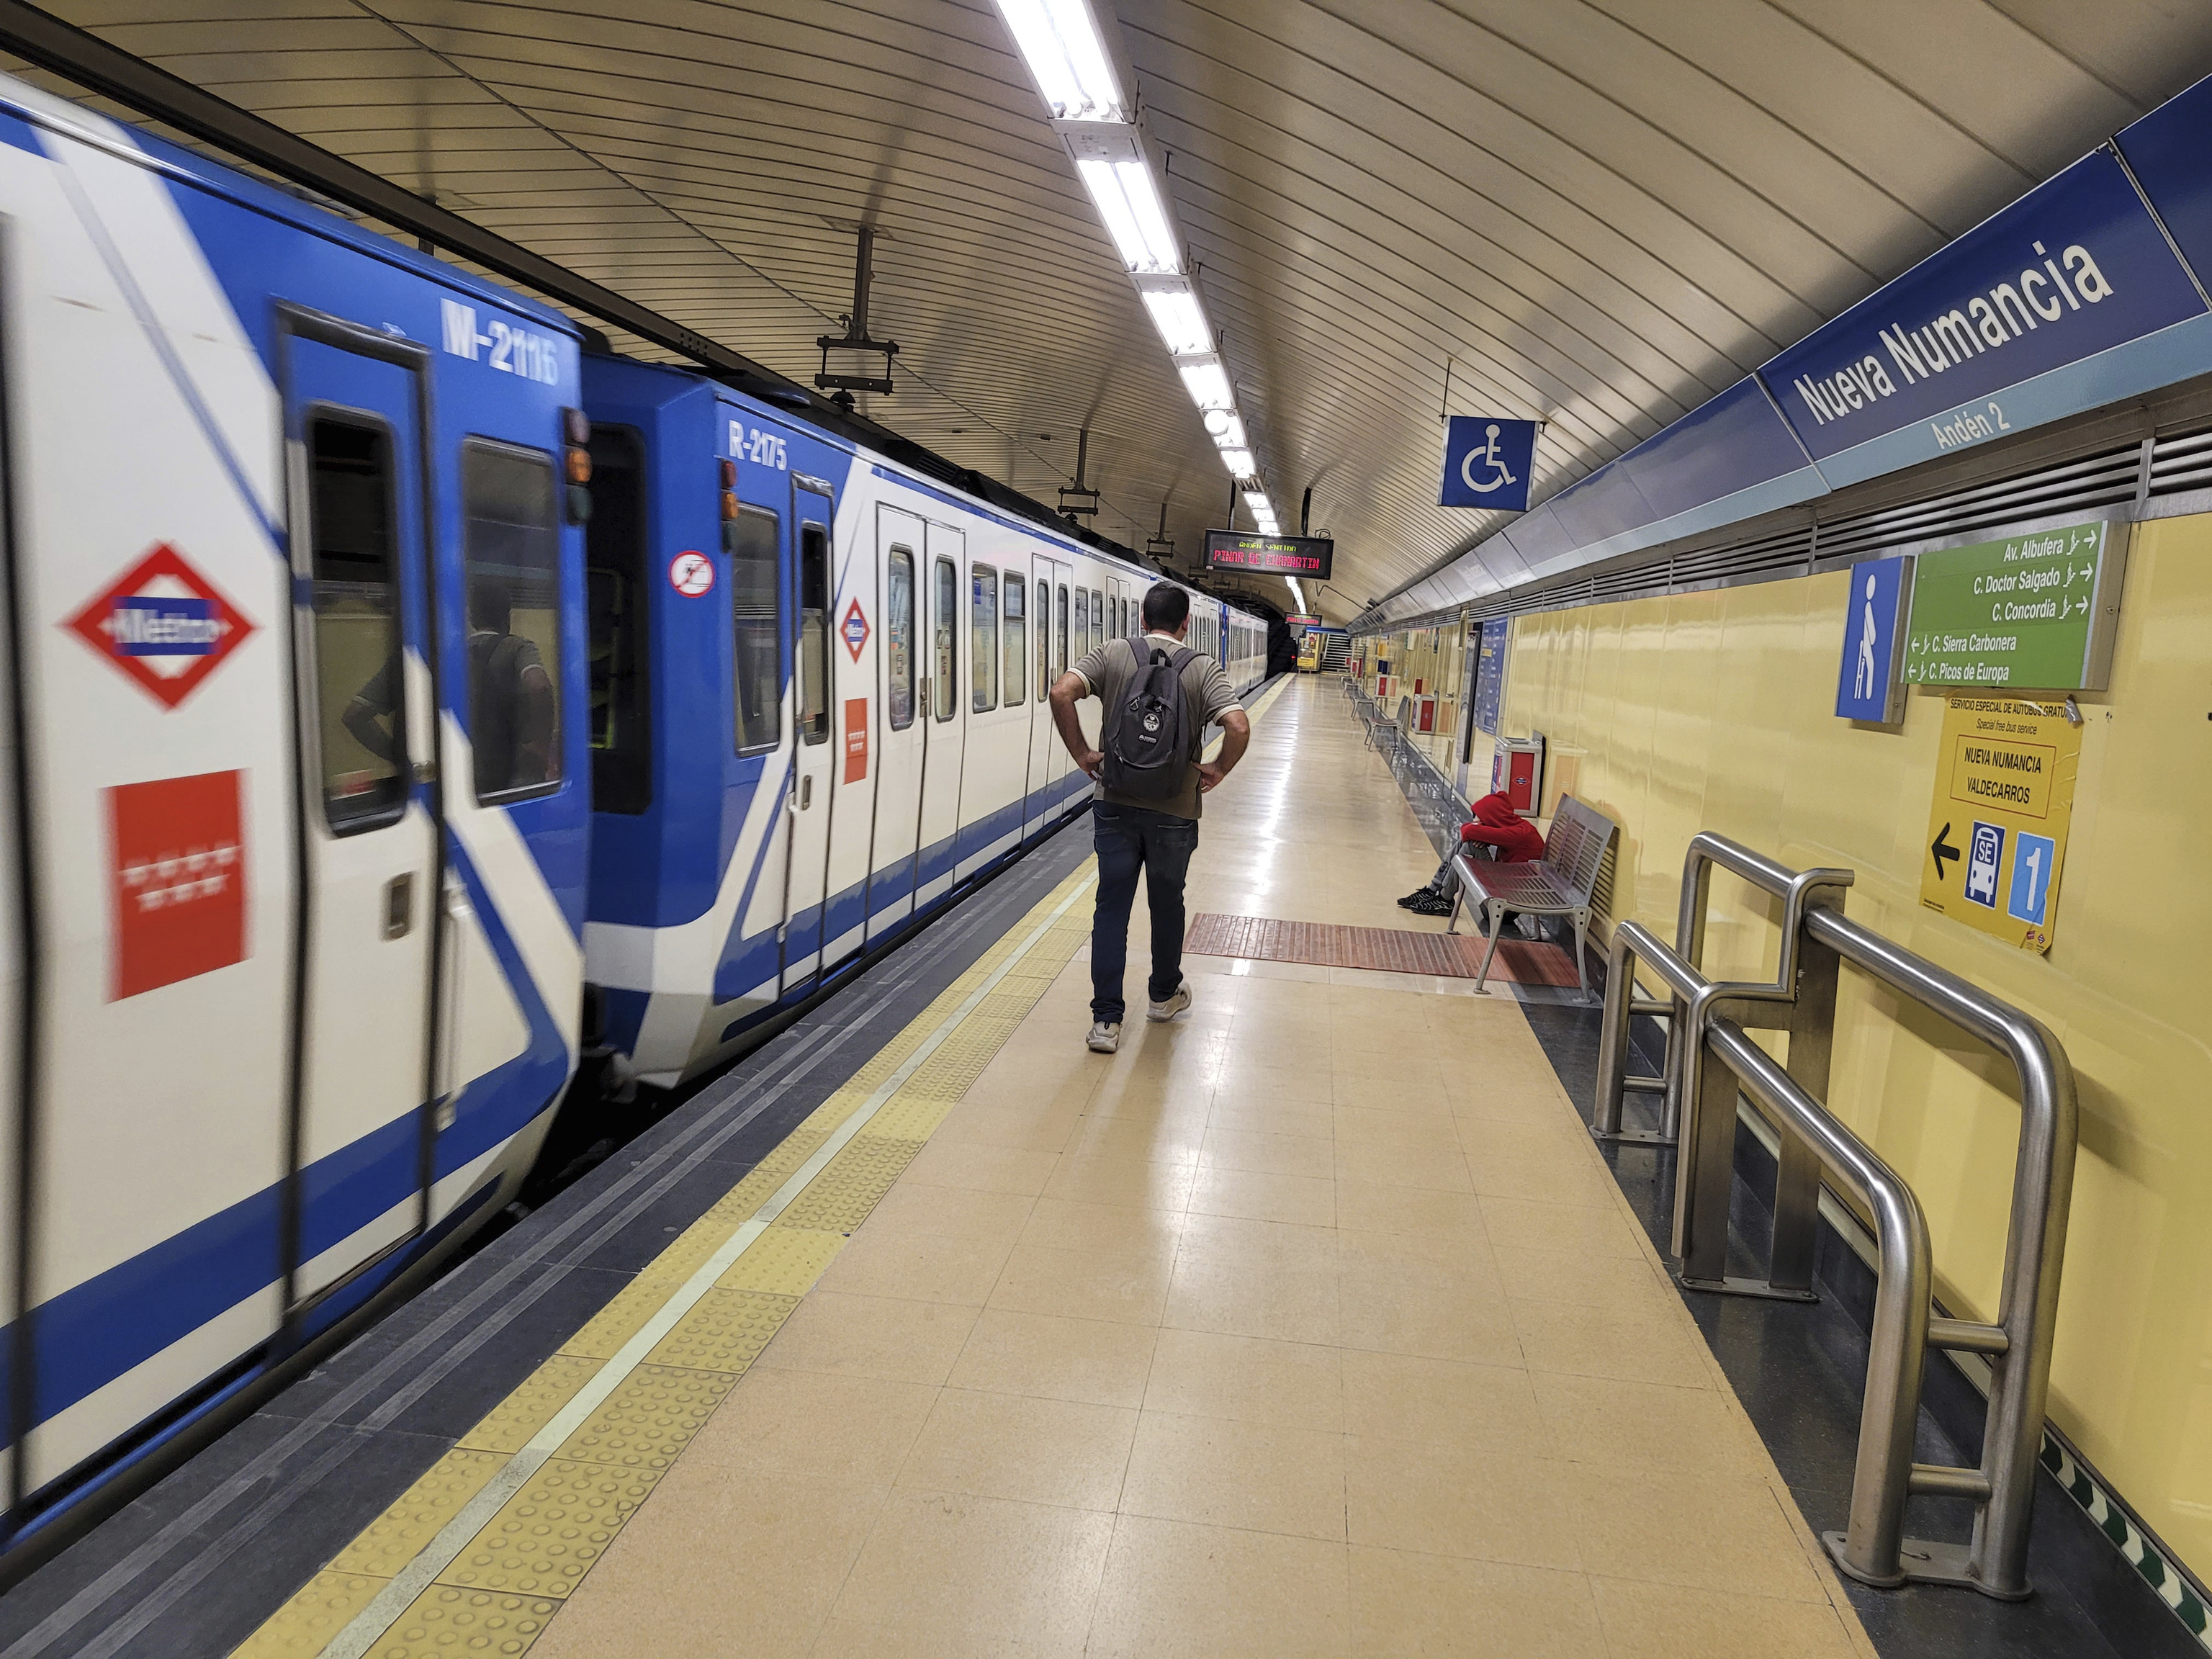 Un tren del Metro de Madrid.